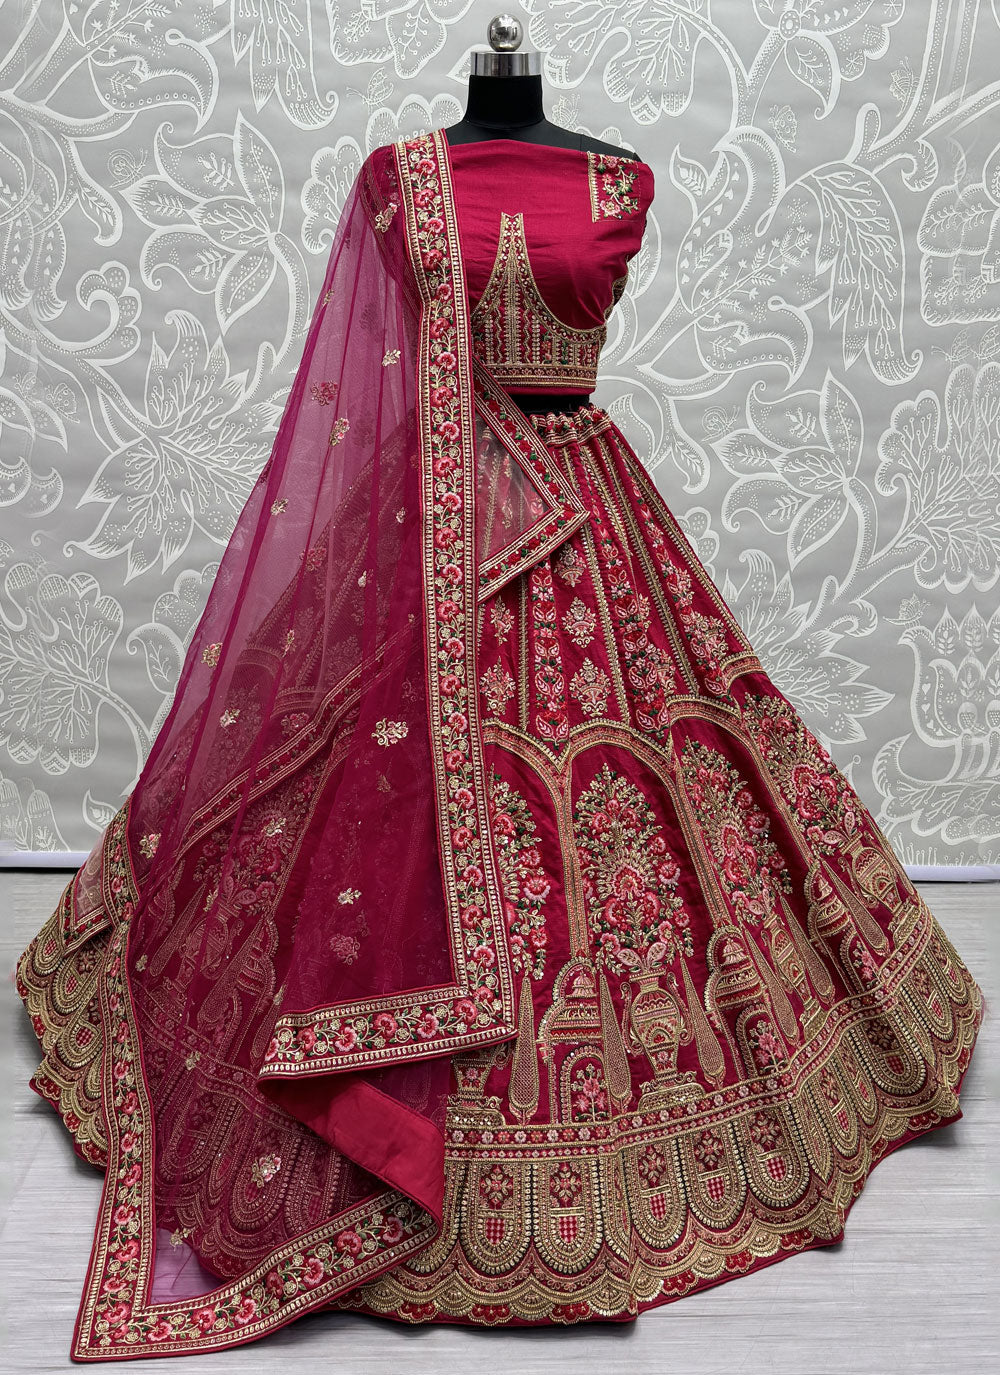 Pink Silk Lehenga Choli With Dori, Embroidered, Hand, Khatli, Sequins And Zardosi Work For Bridal